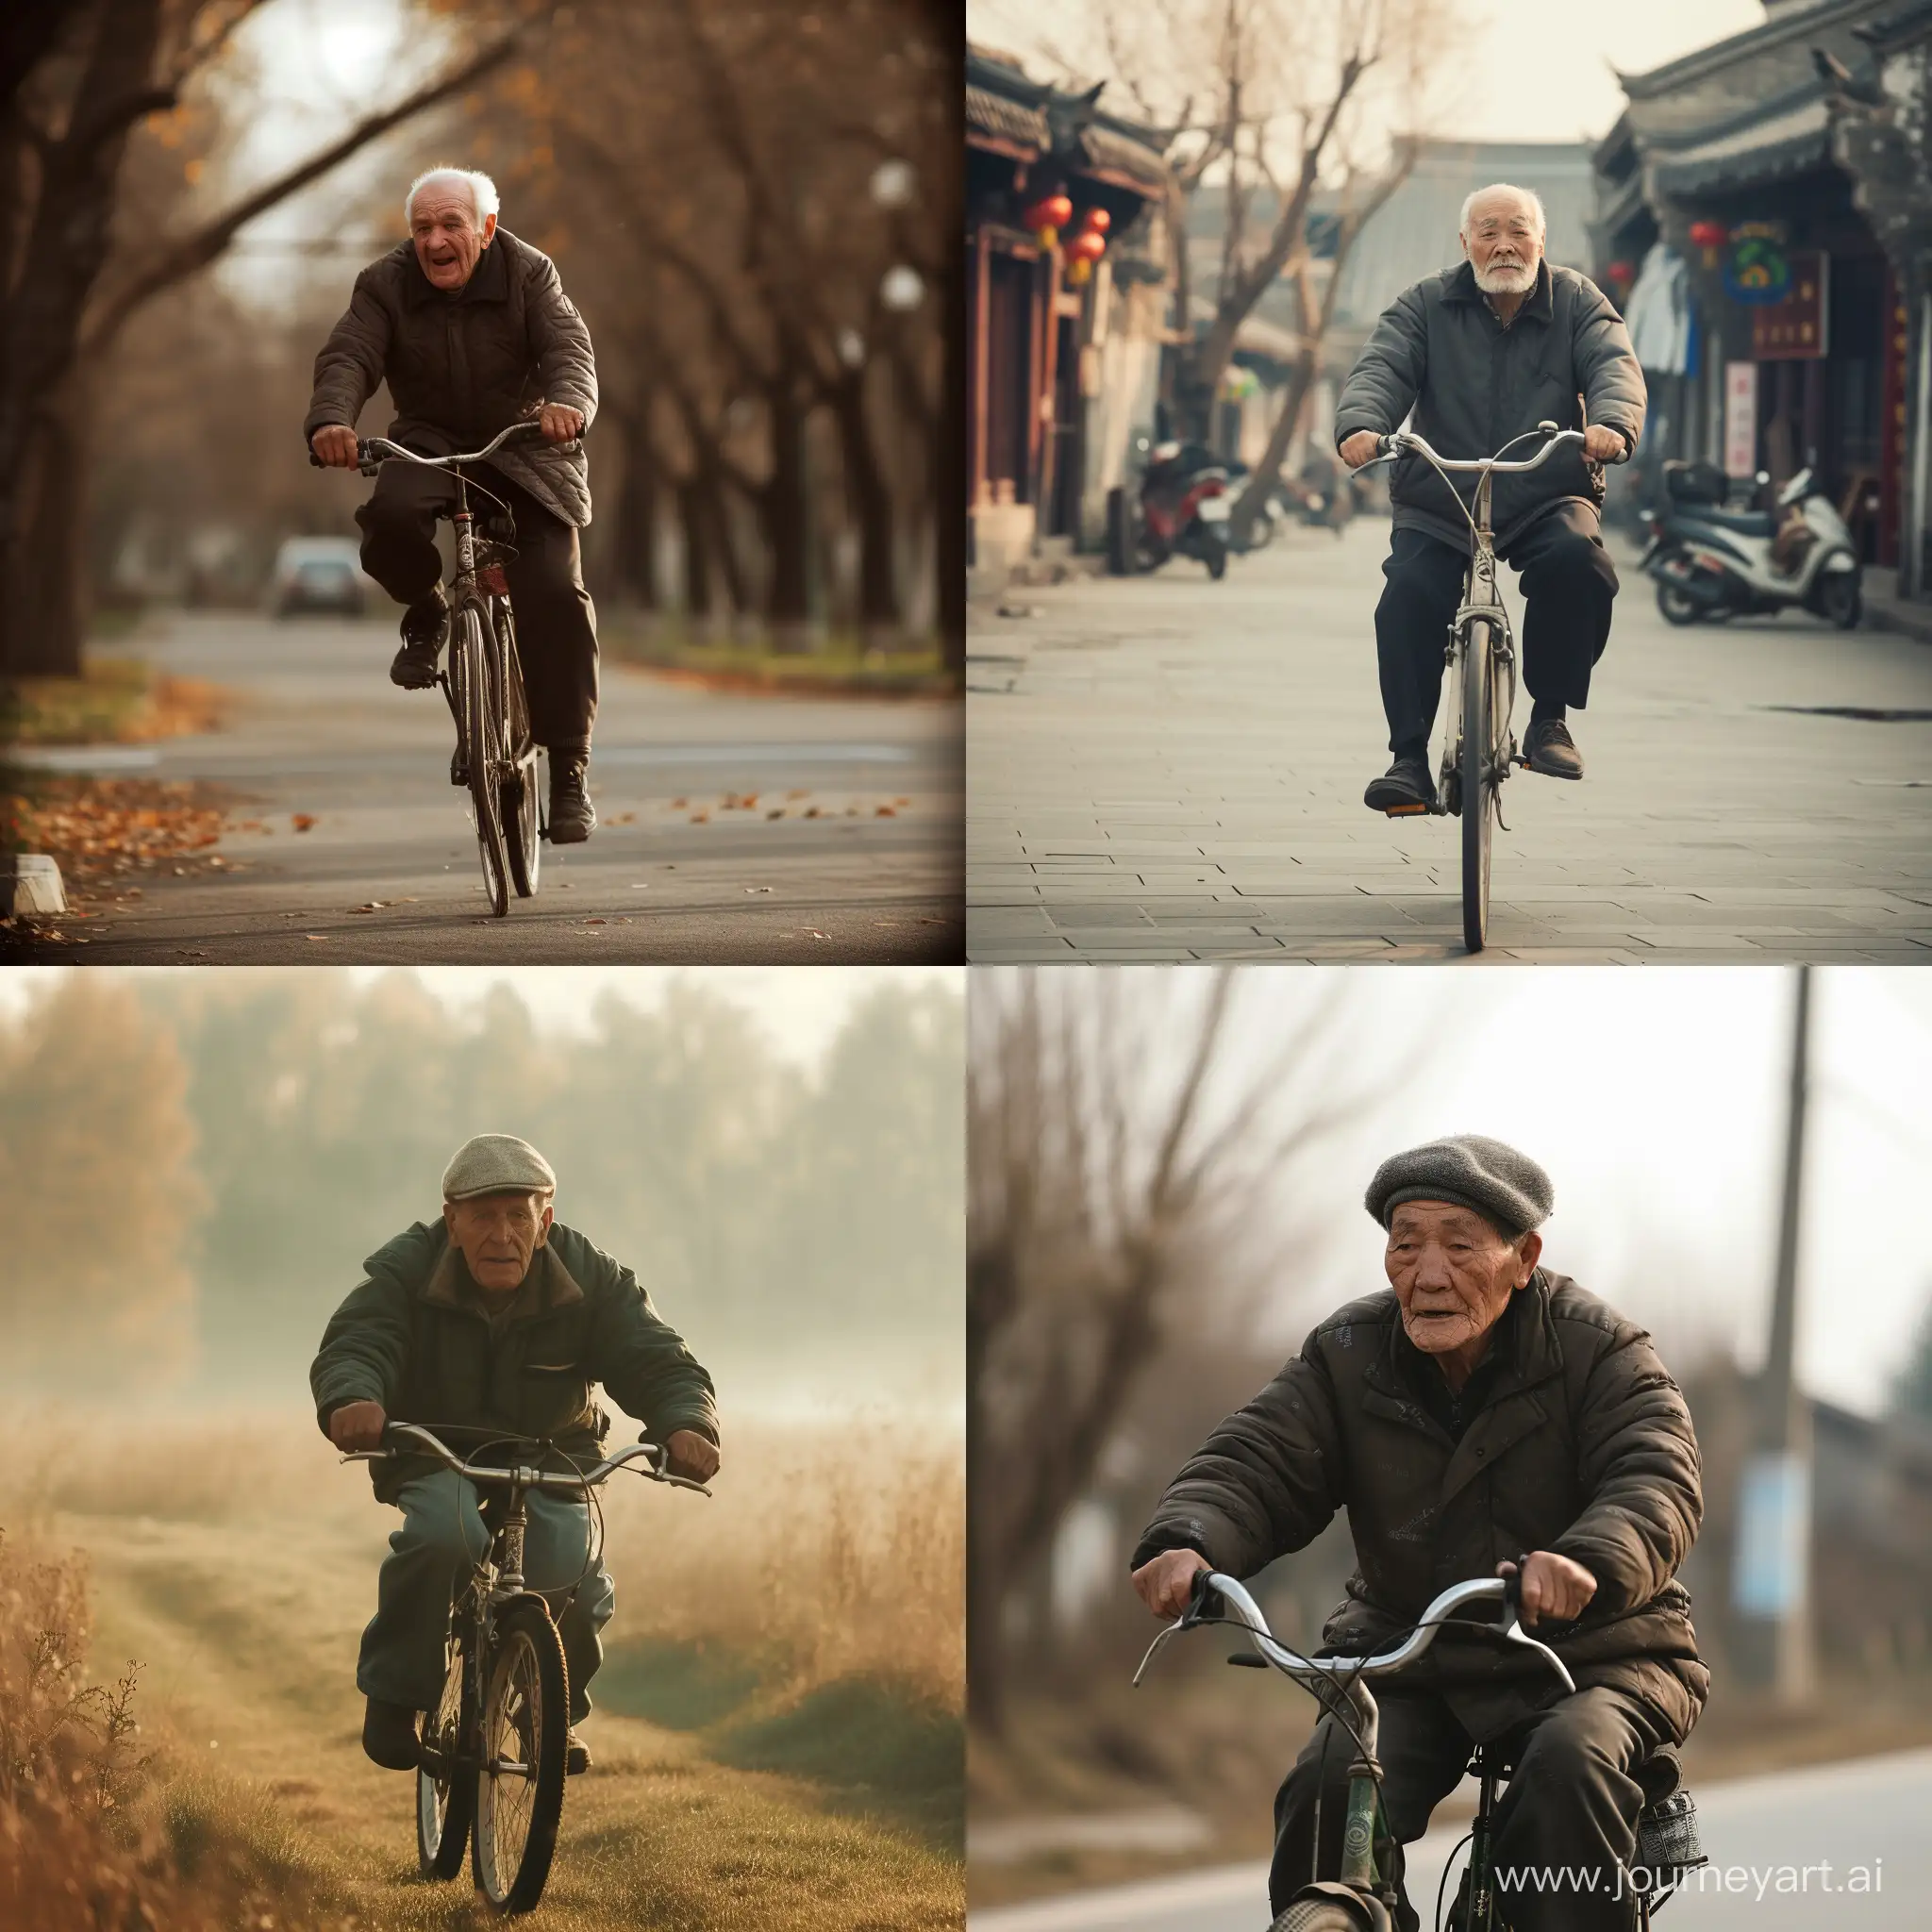 Elderly-Gentleman-Enjoying-a-Bike-Ride-in-Serene-Countryside